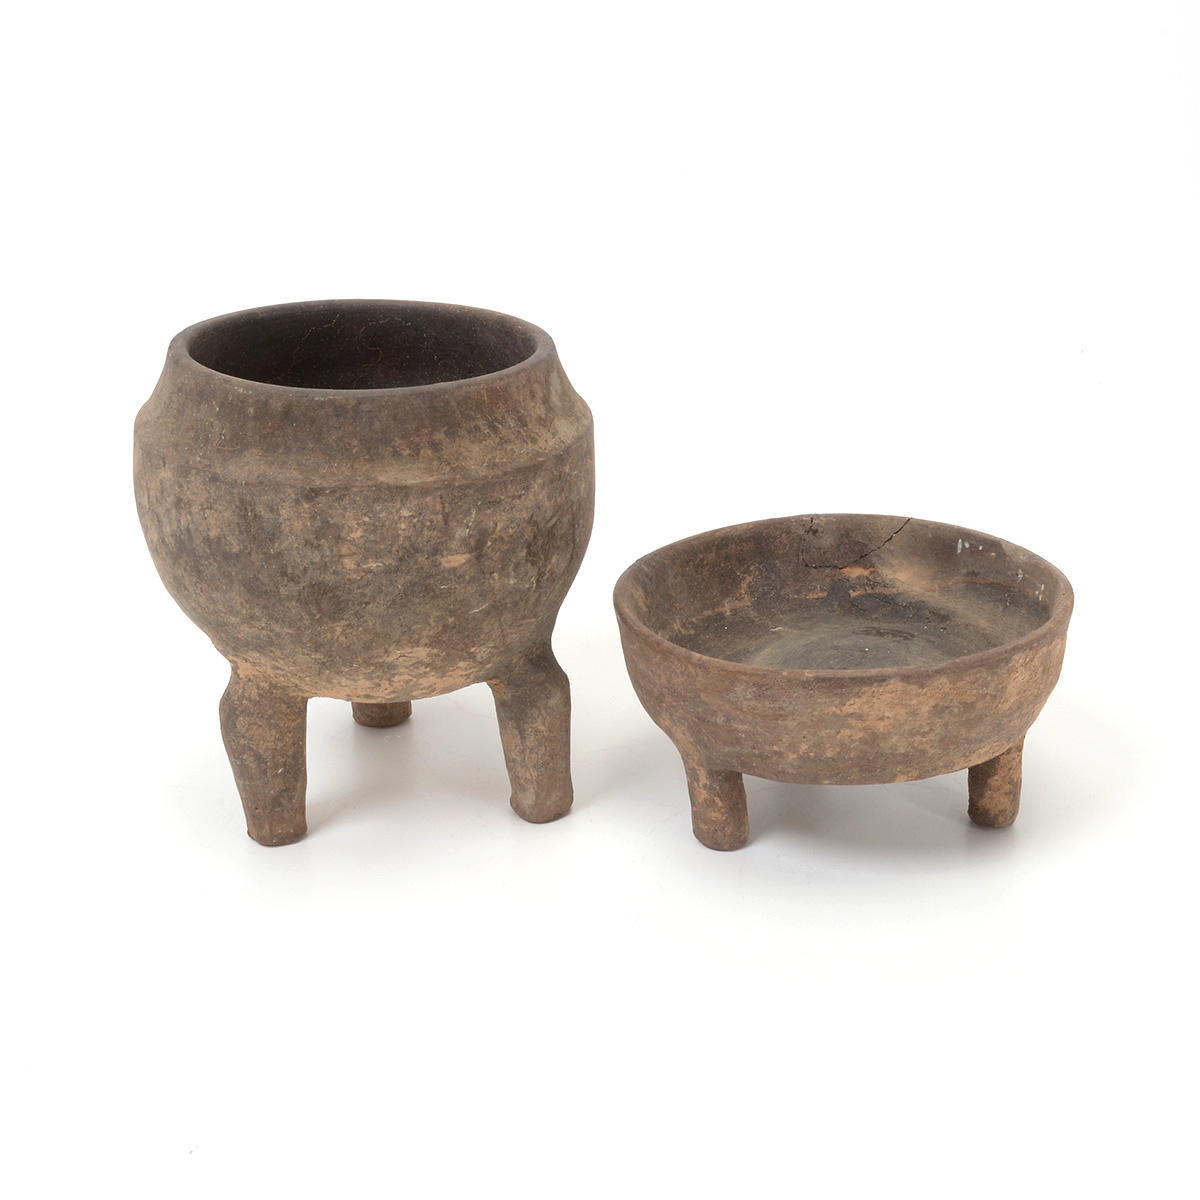 Pottery Tripod Vessel and Lid, Western Zhou Dynasty - Image 4 of 8